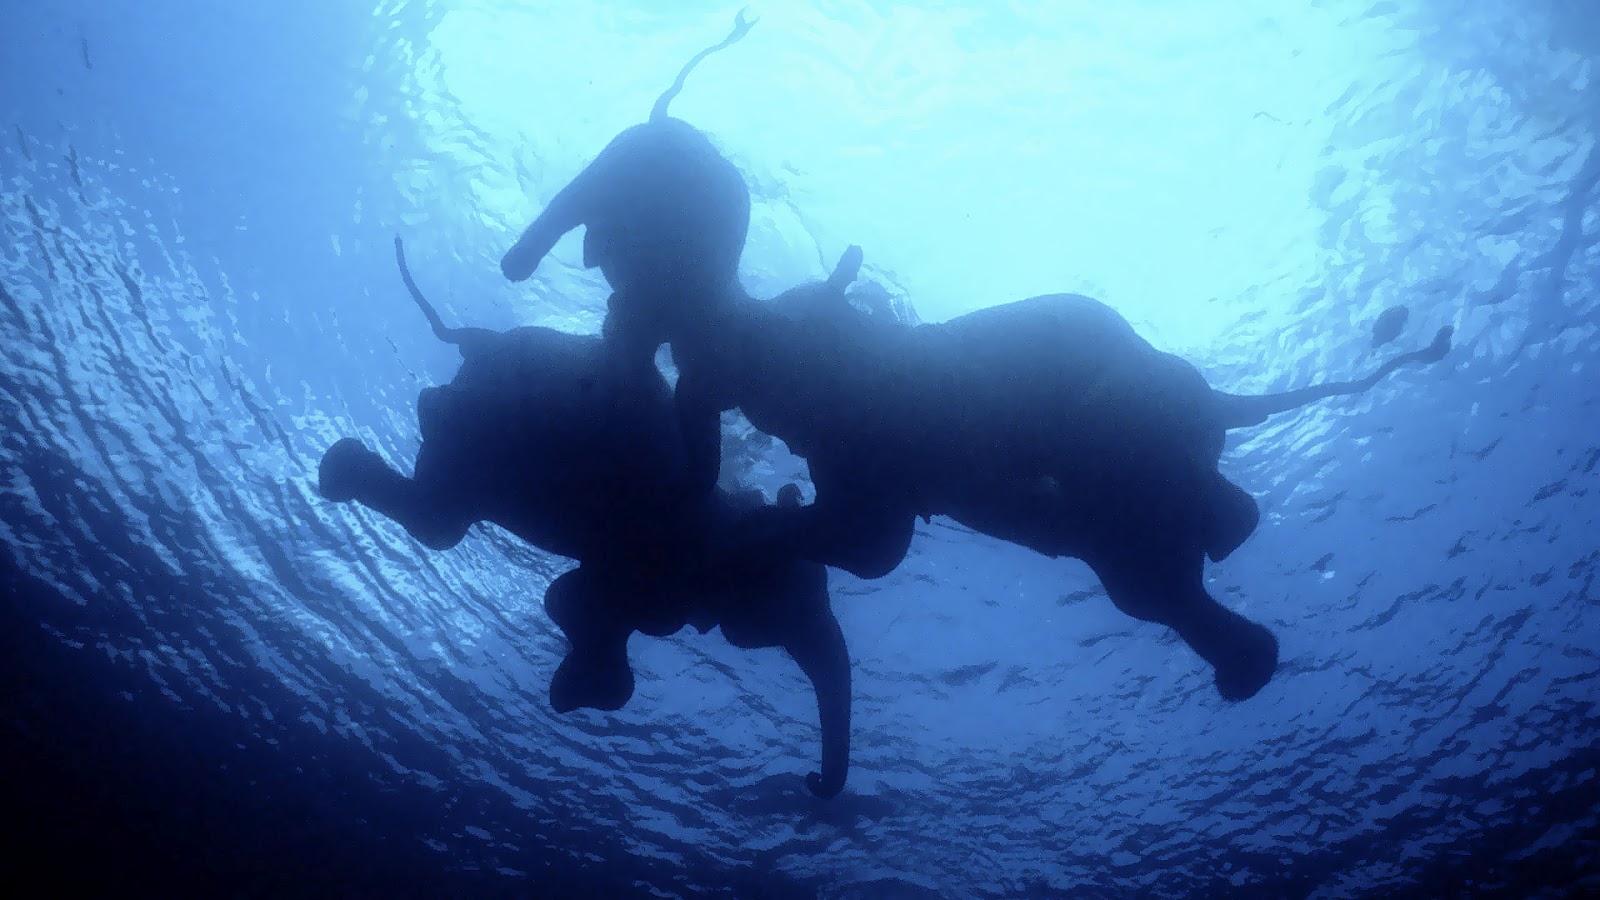 HD Animal Wallpaper With Swimming Elephants Underwater